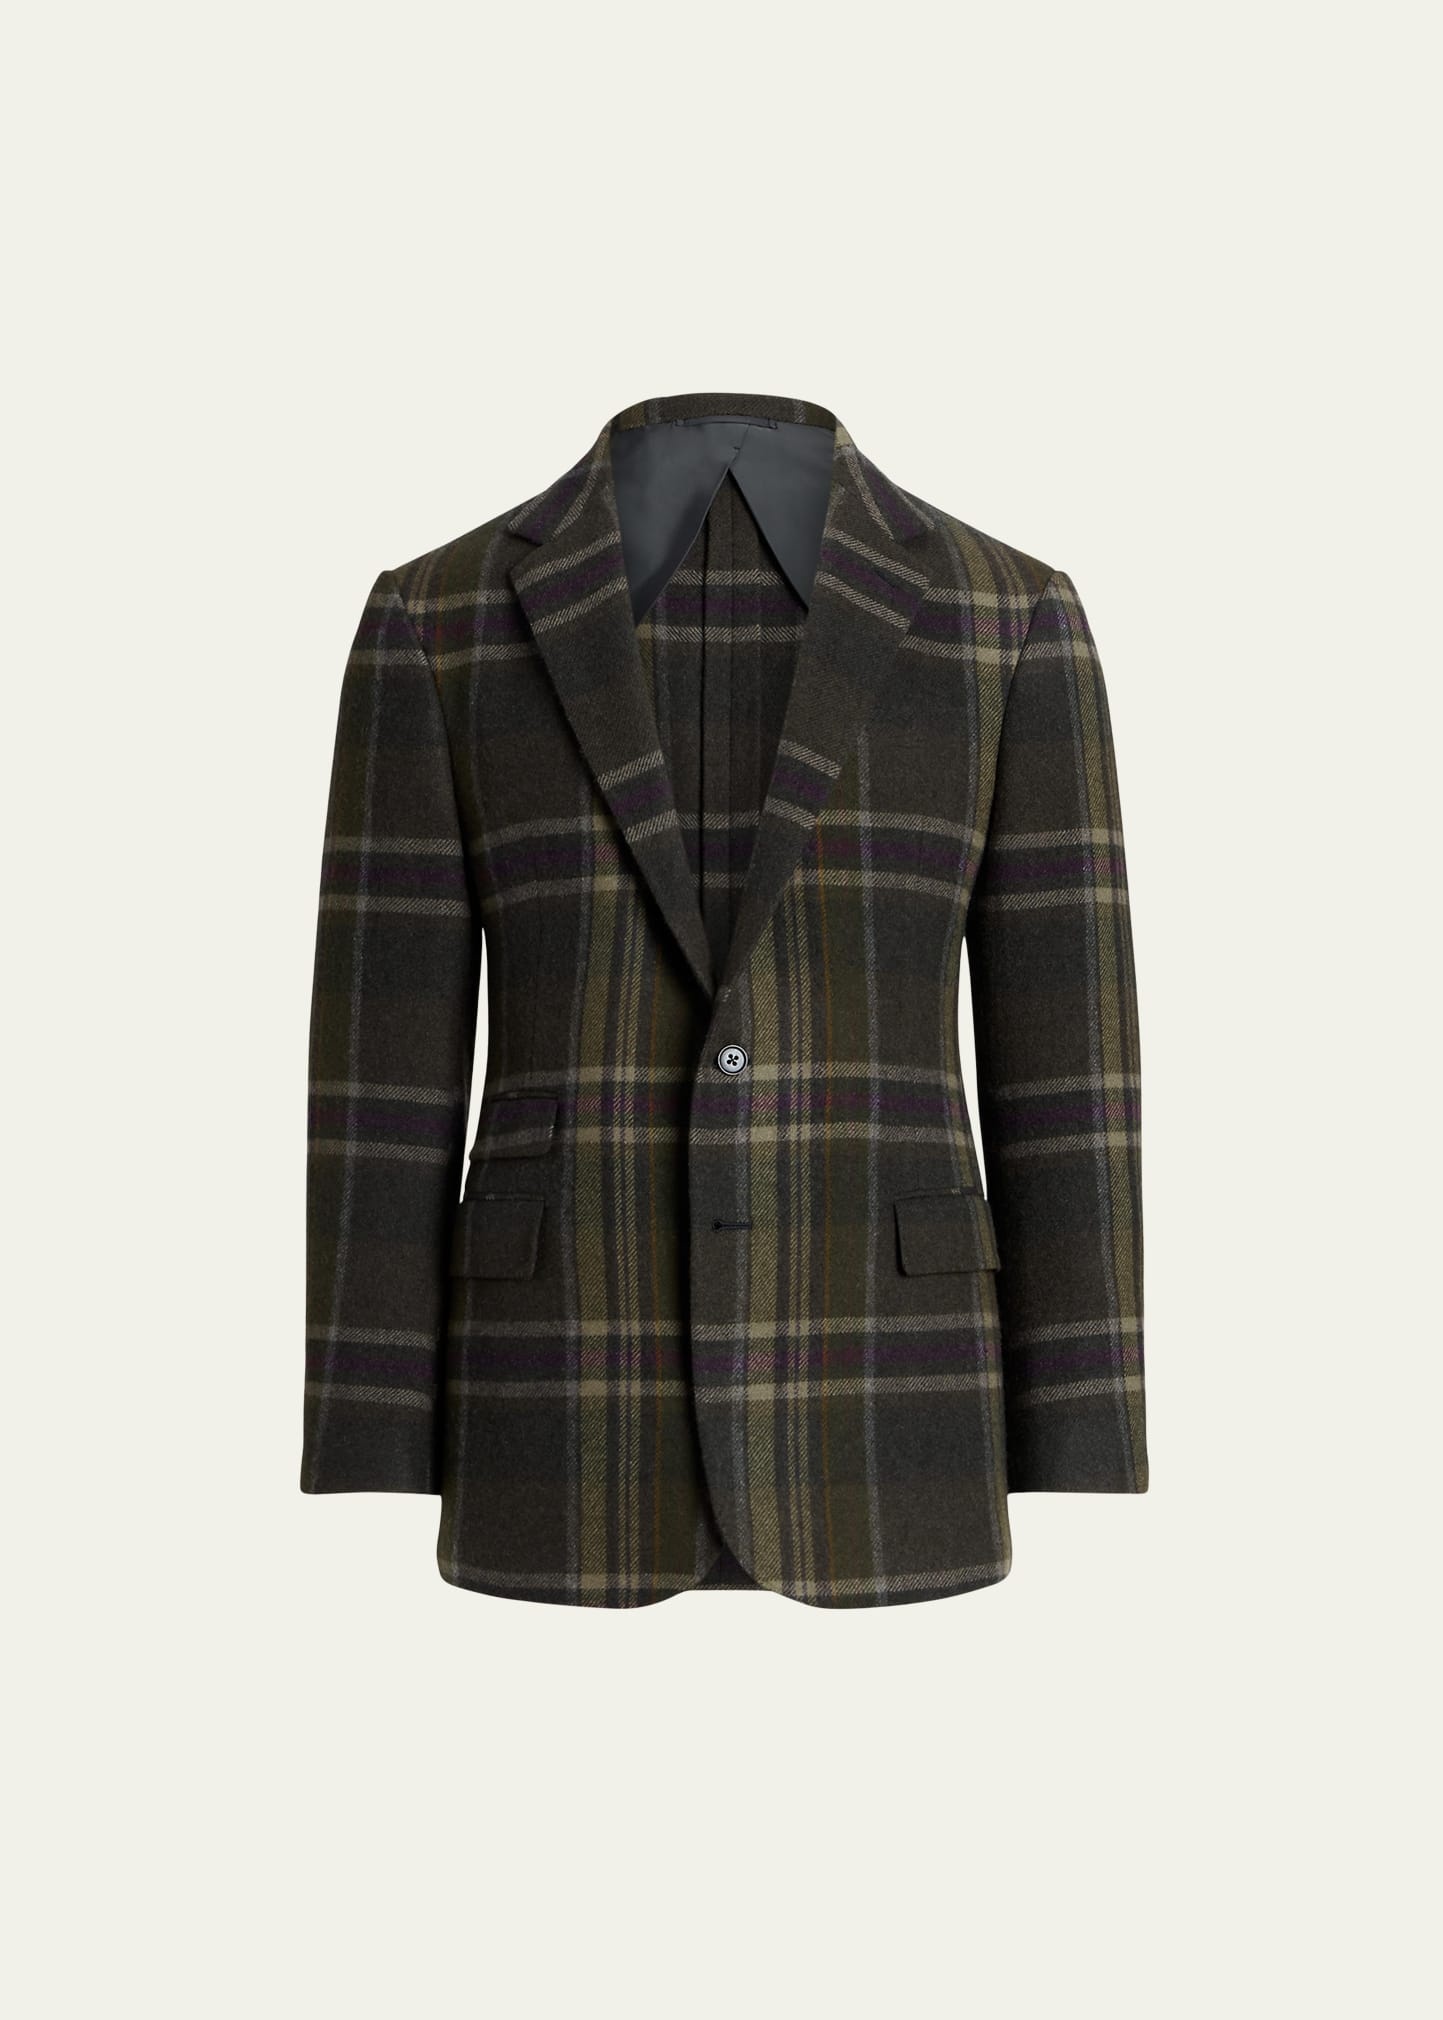 Men's Handmade Plaid Cashmere Jacket - 1